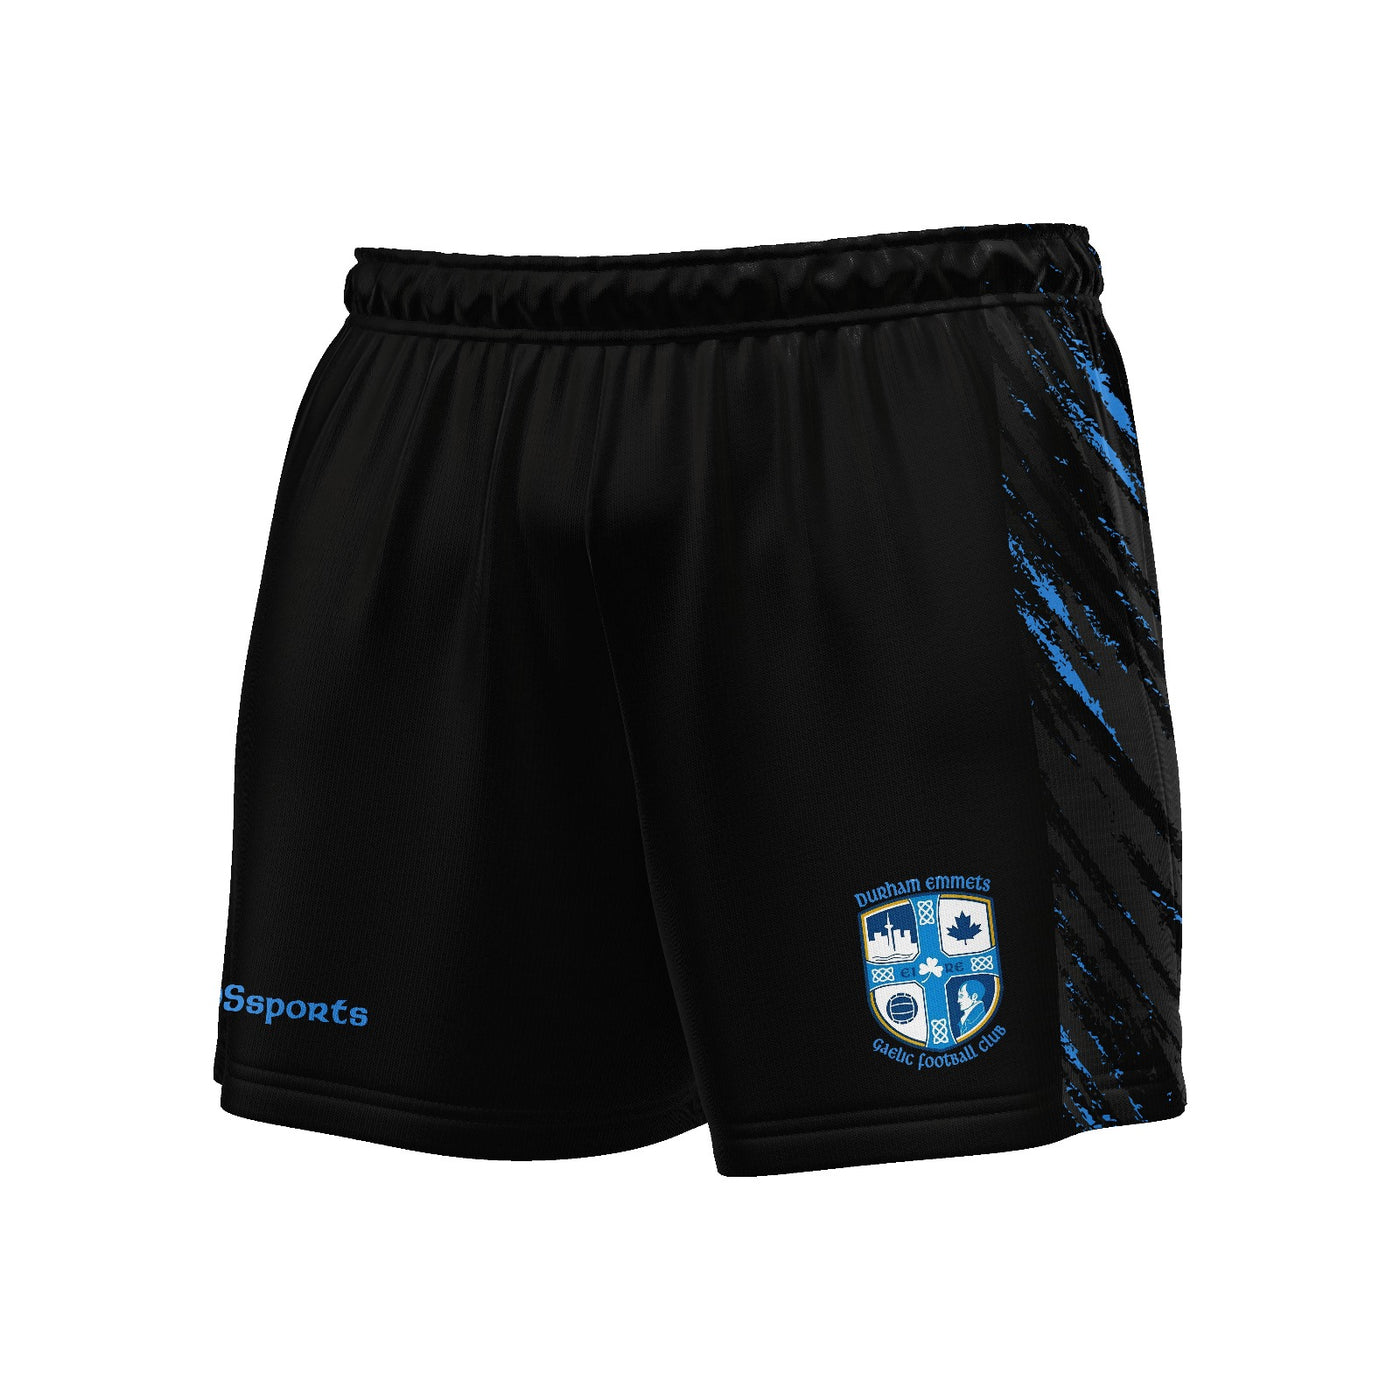 Durham Emmets- Black Shorts